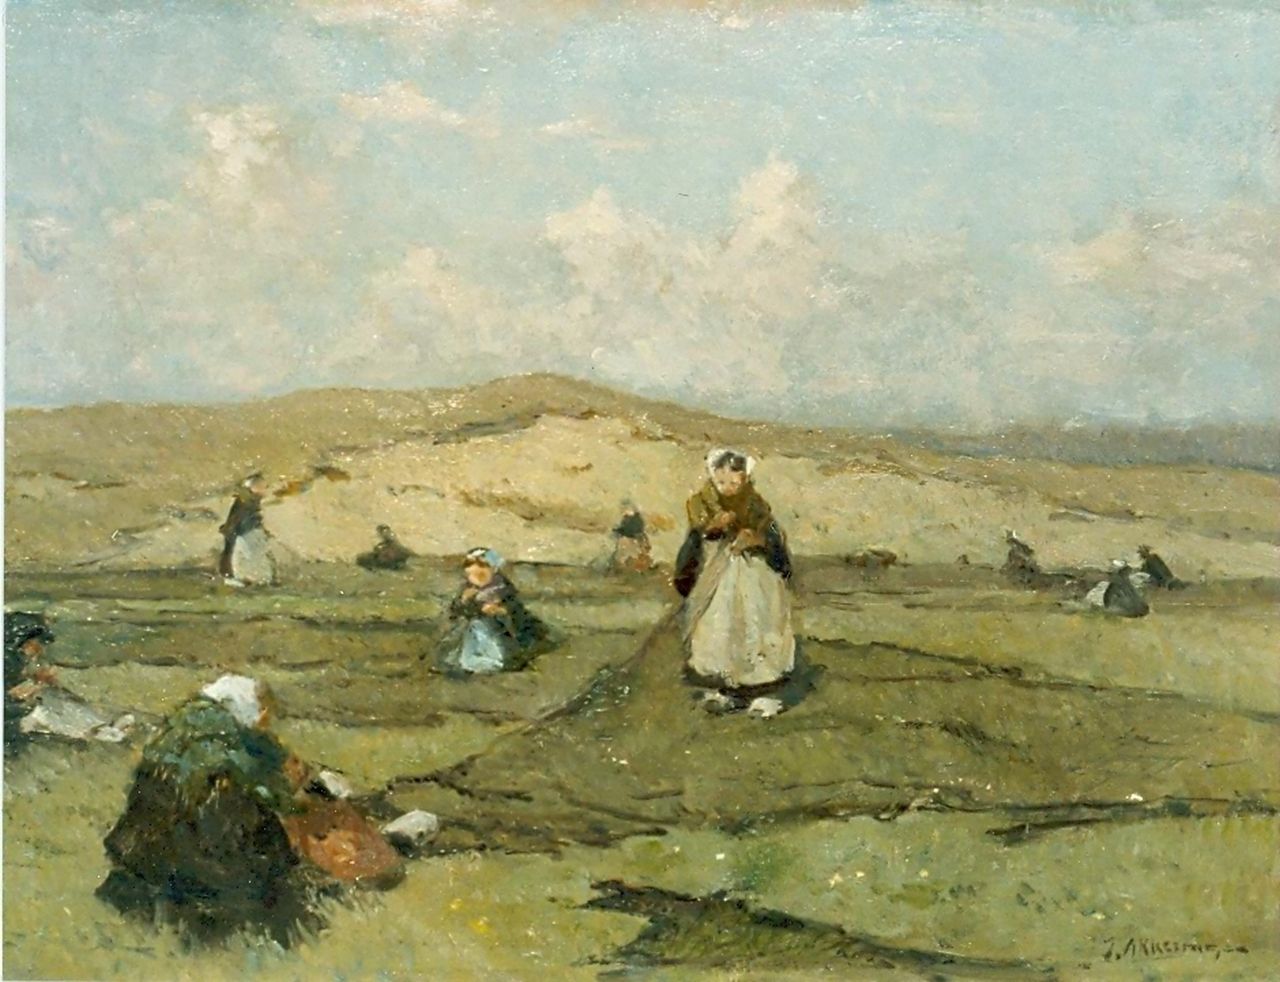 Akkeringa J.E.H.  | 'Johannes Evert' Hendrik Akkeringa, Nettenboetsters in de duinen, olieverf op doek 33,0 x 45,0 cm, gesigneerd rechtsonder